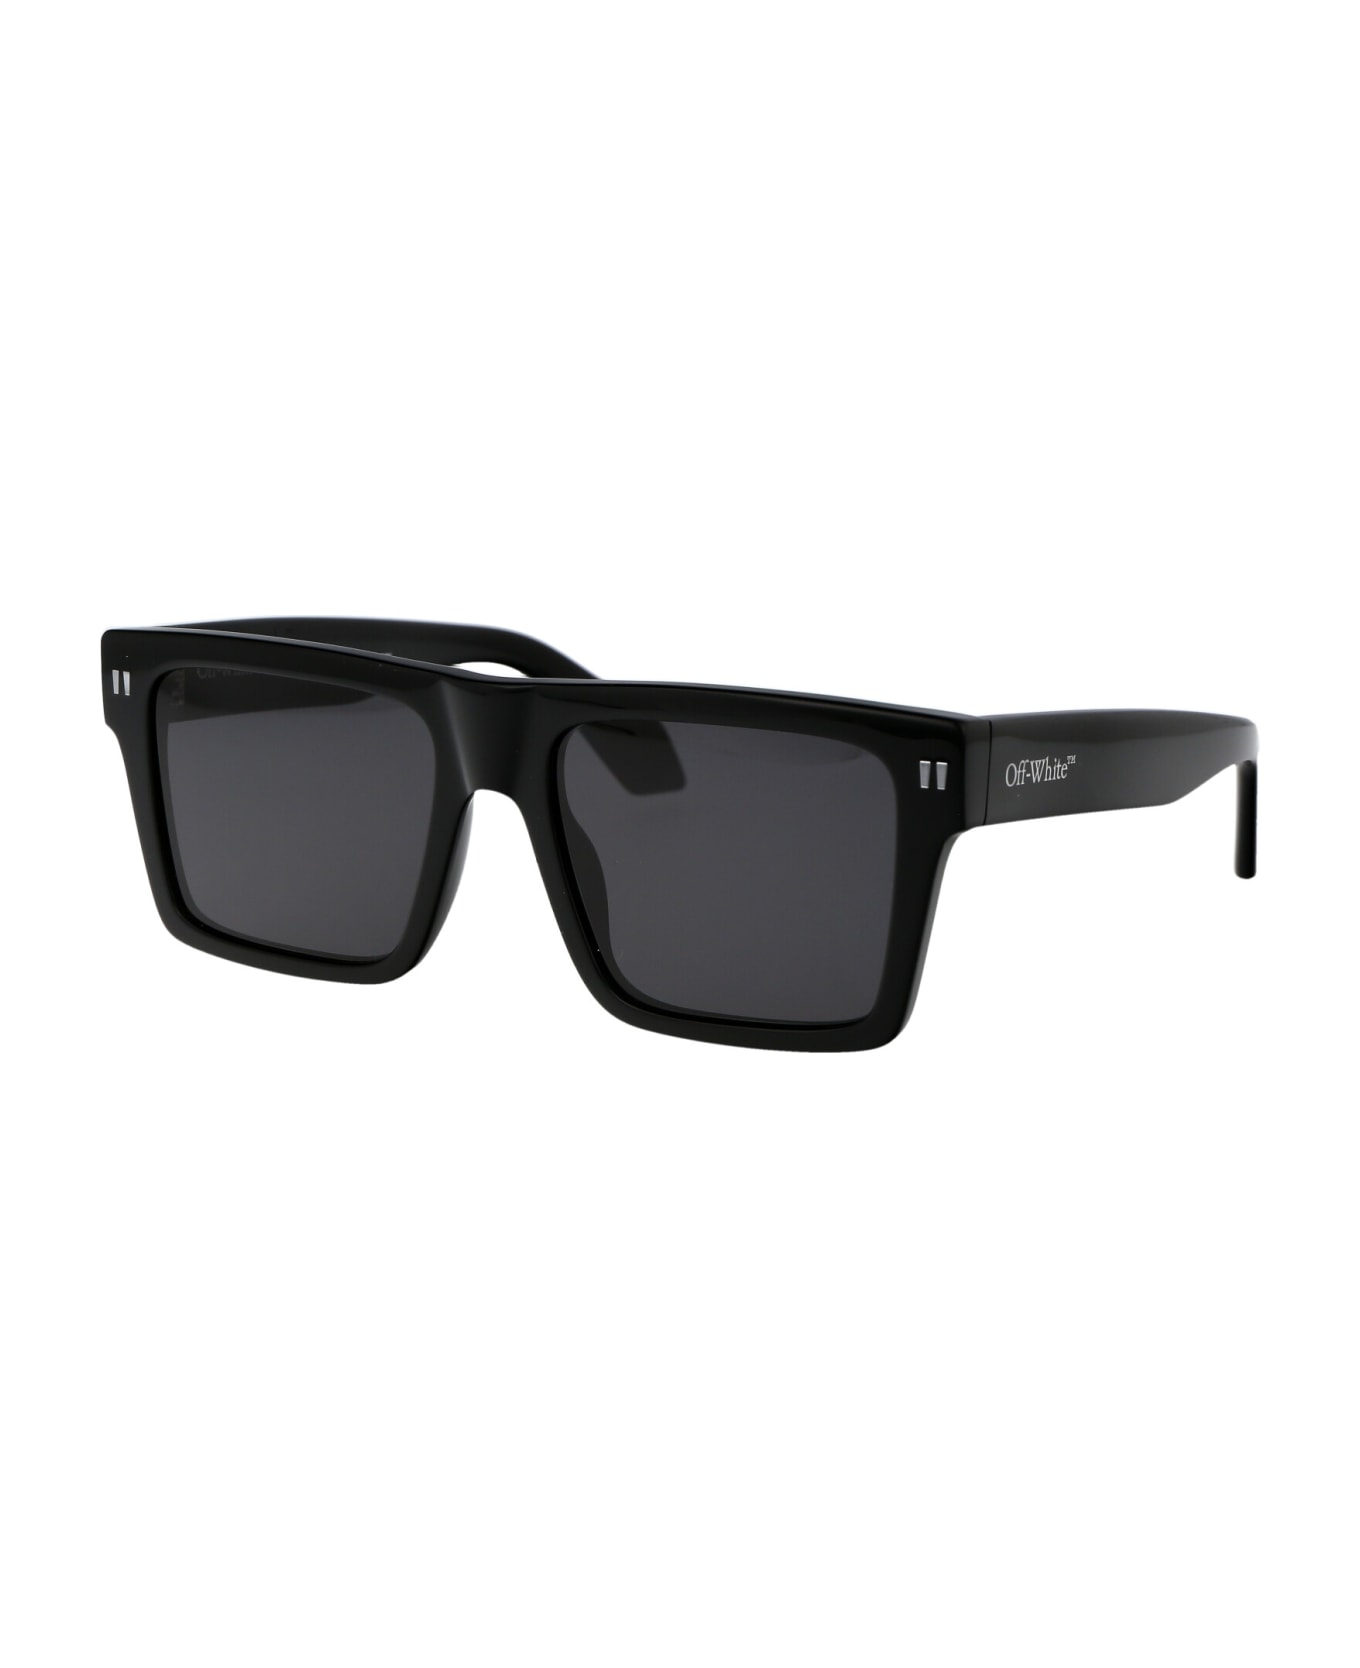 Off-White Lawton Sunglasses - 1007 BLACK